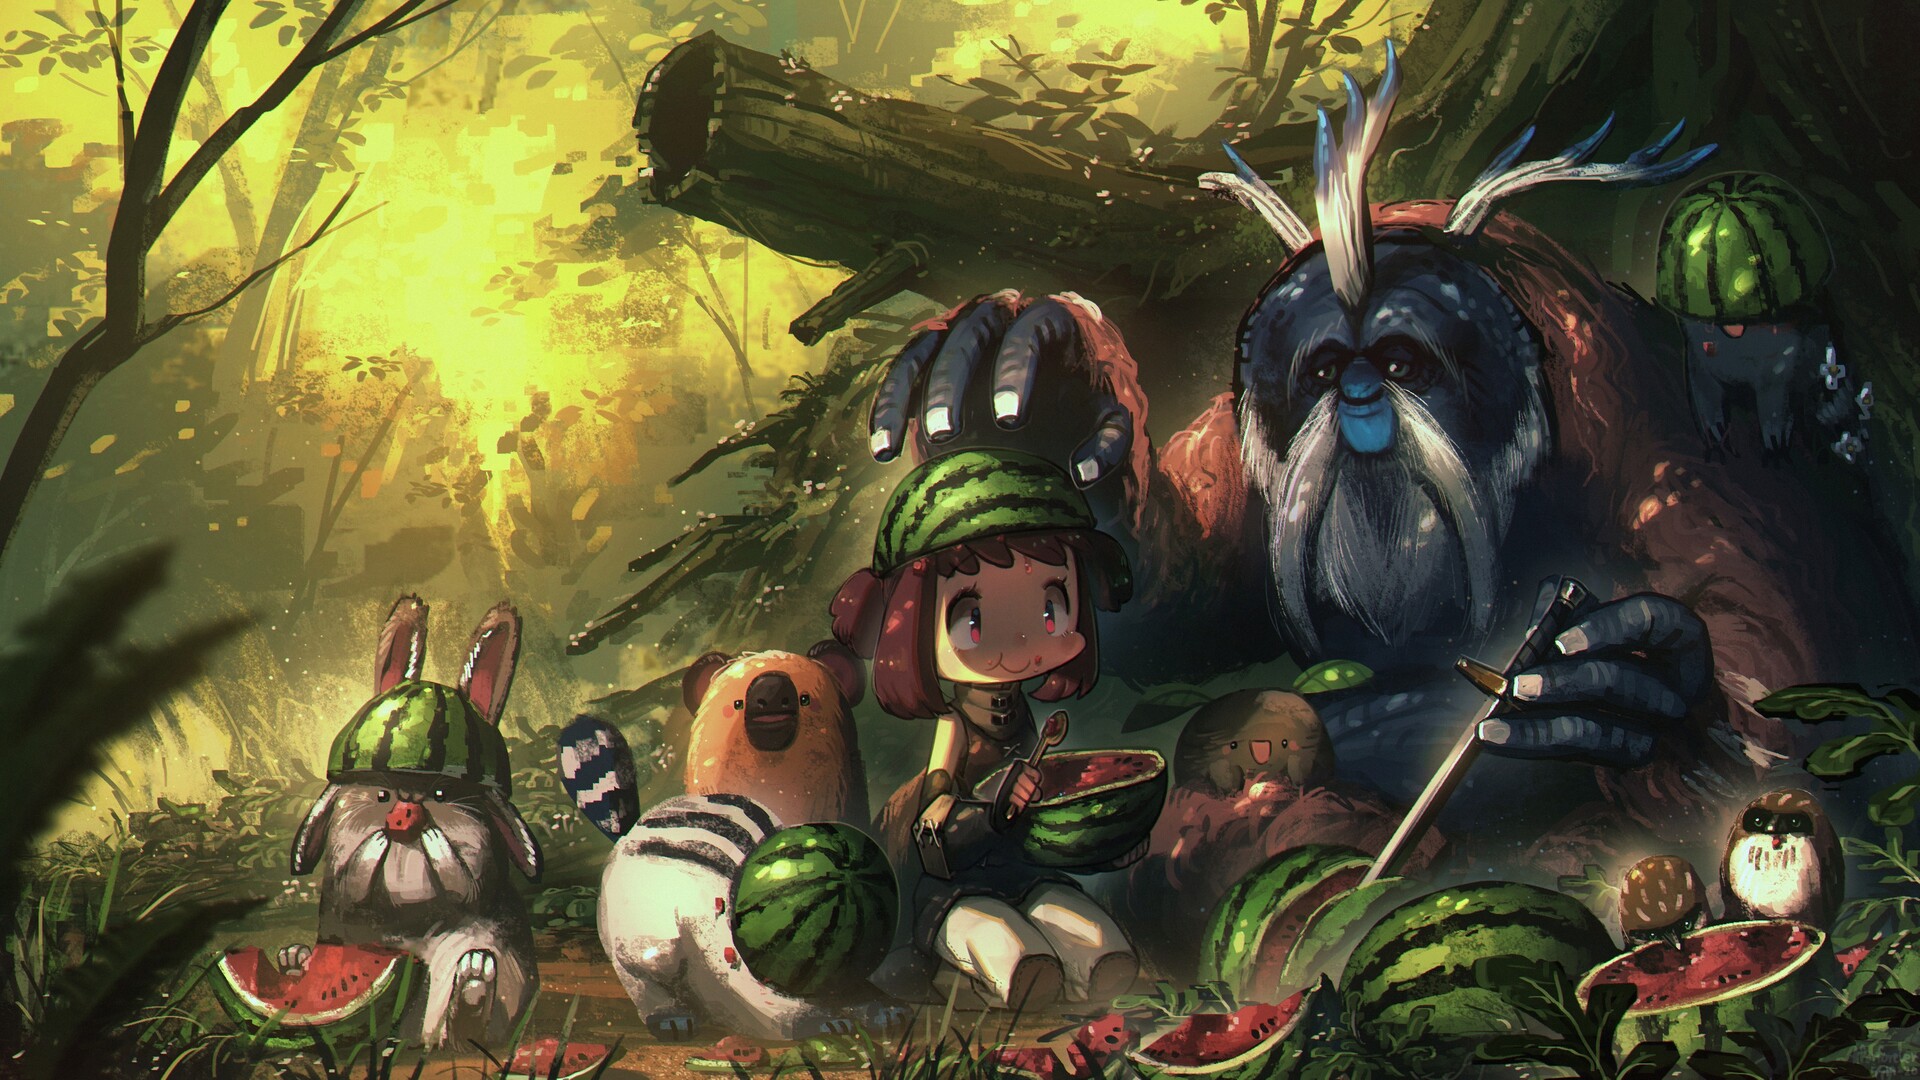 Anime 1920x1080 Porforever digital art fantasy art sword watermelons forest orangutans